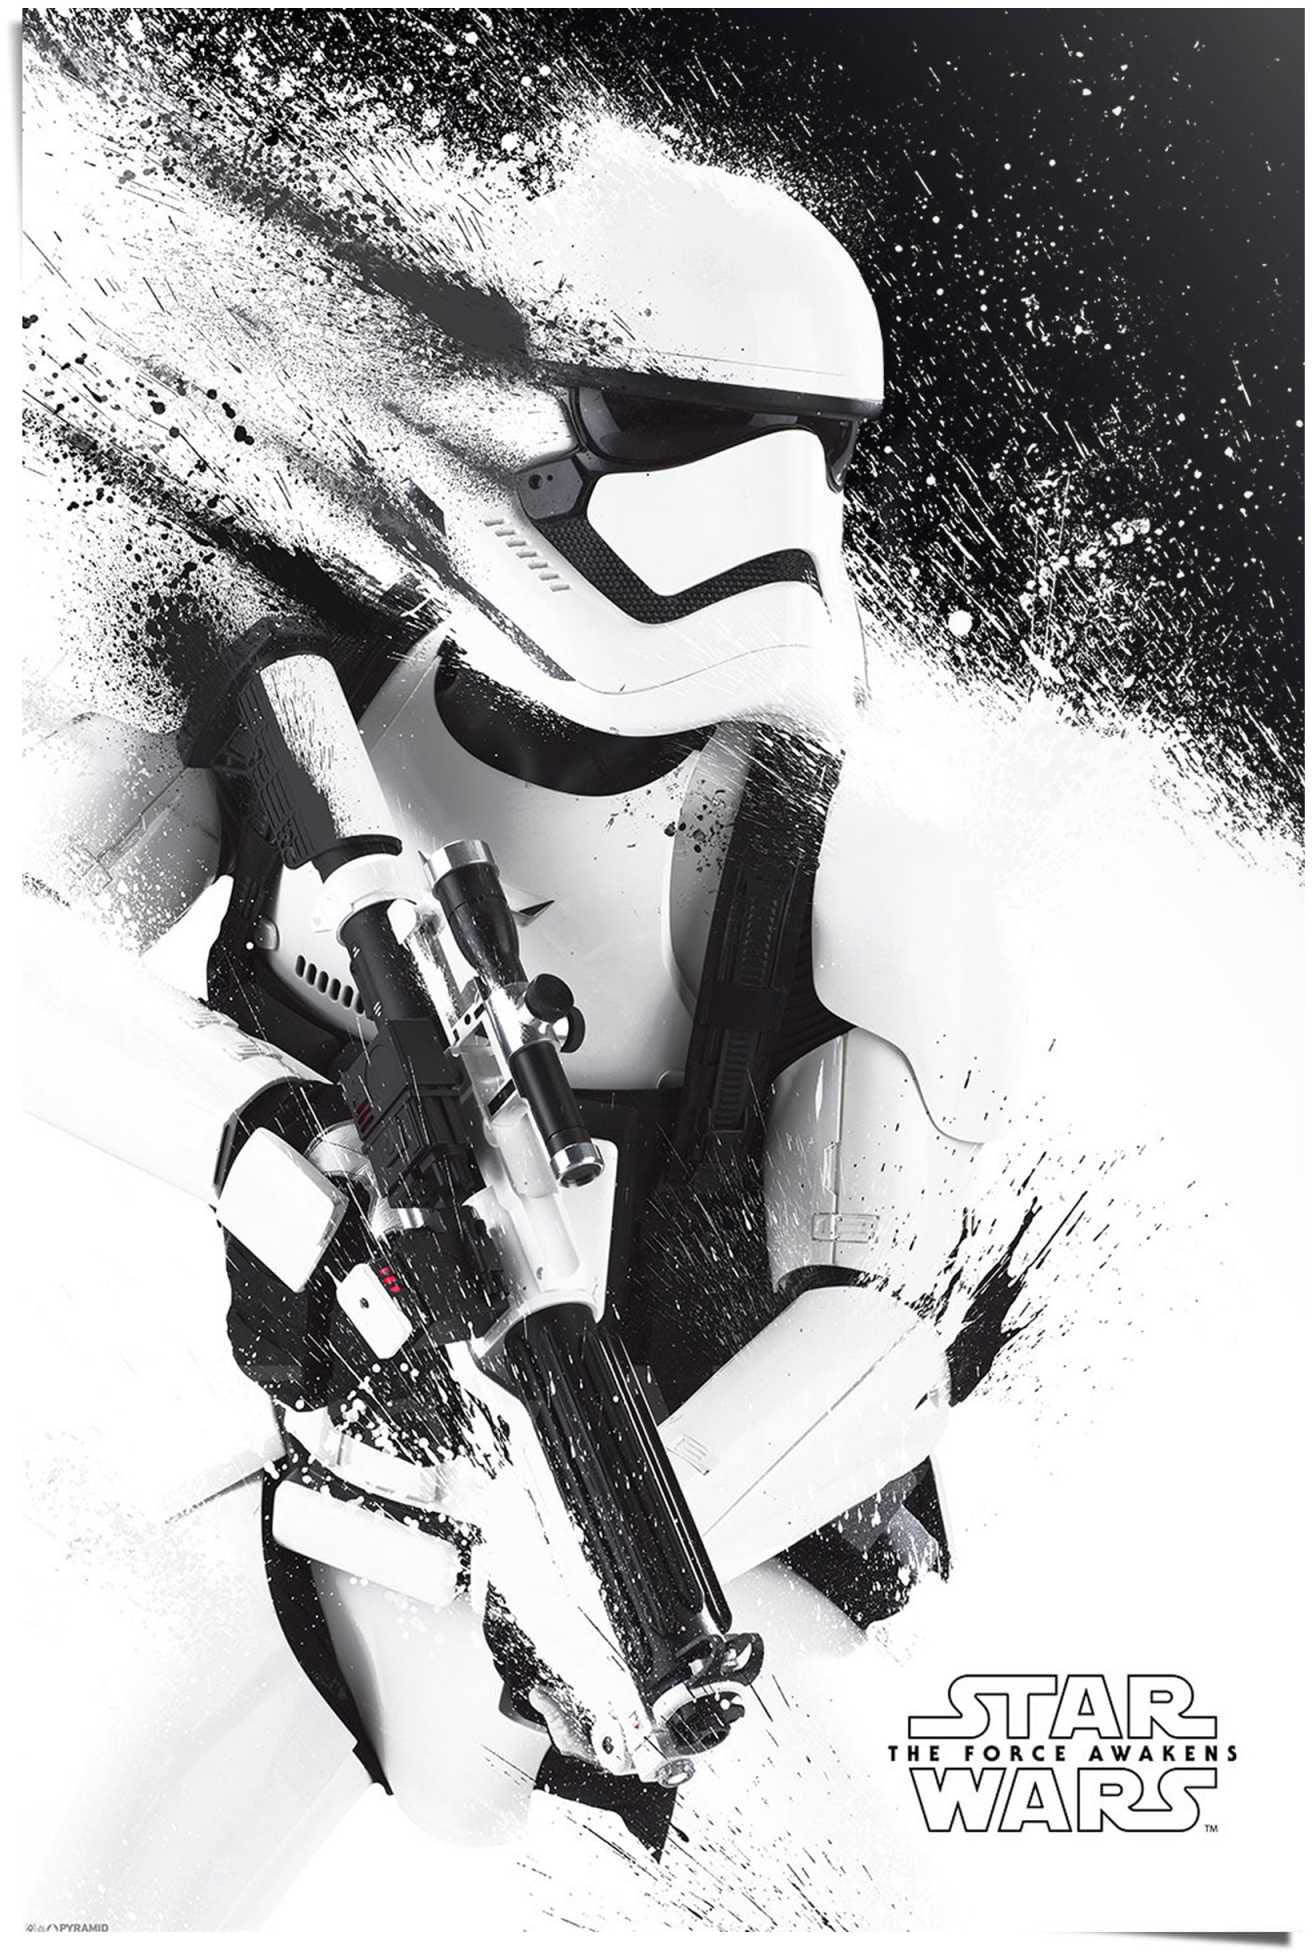 »Poster Wars Science-Fiction, Episode (1 Star bestellen VII BAUR Reinders! | Poster St.) Stormtrooper«,